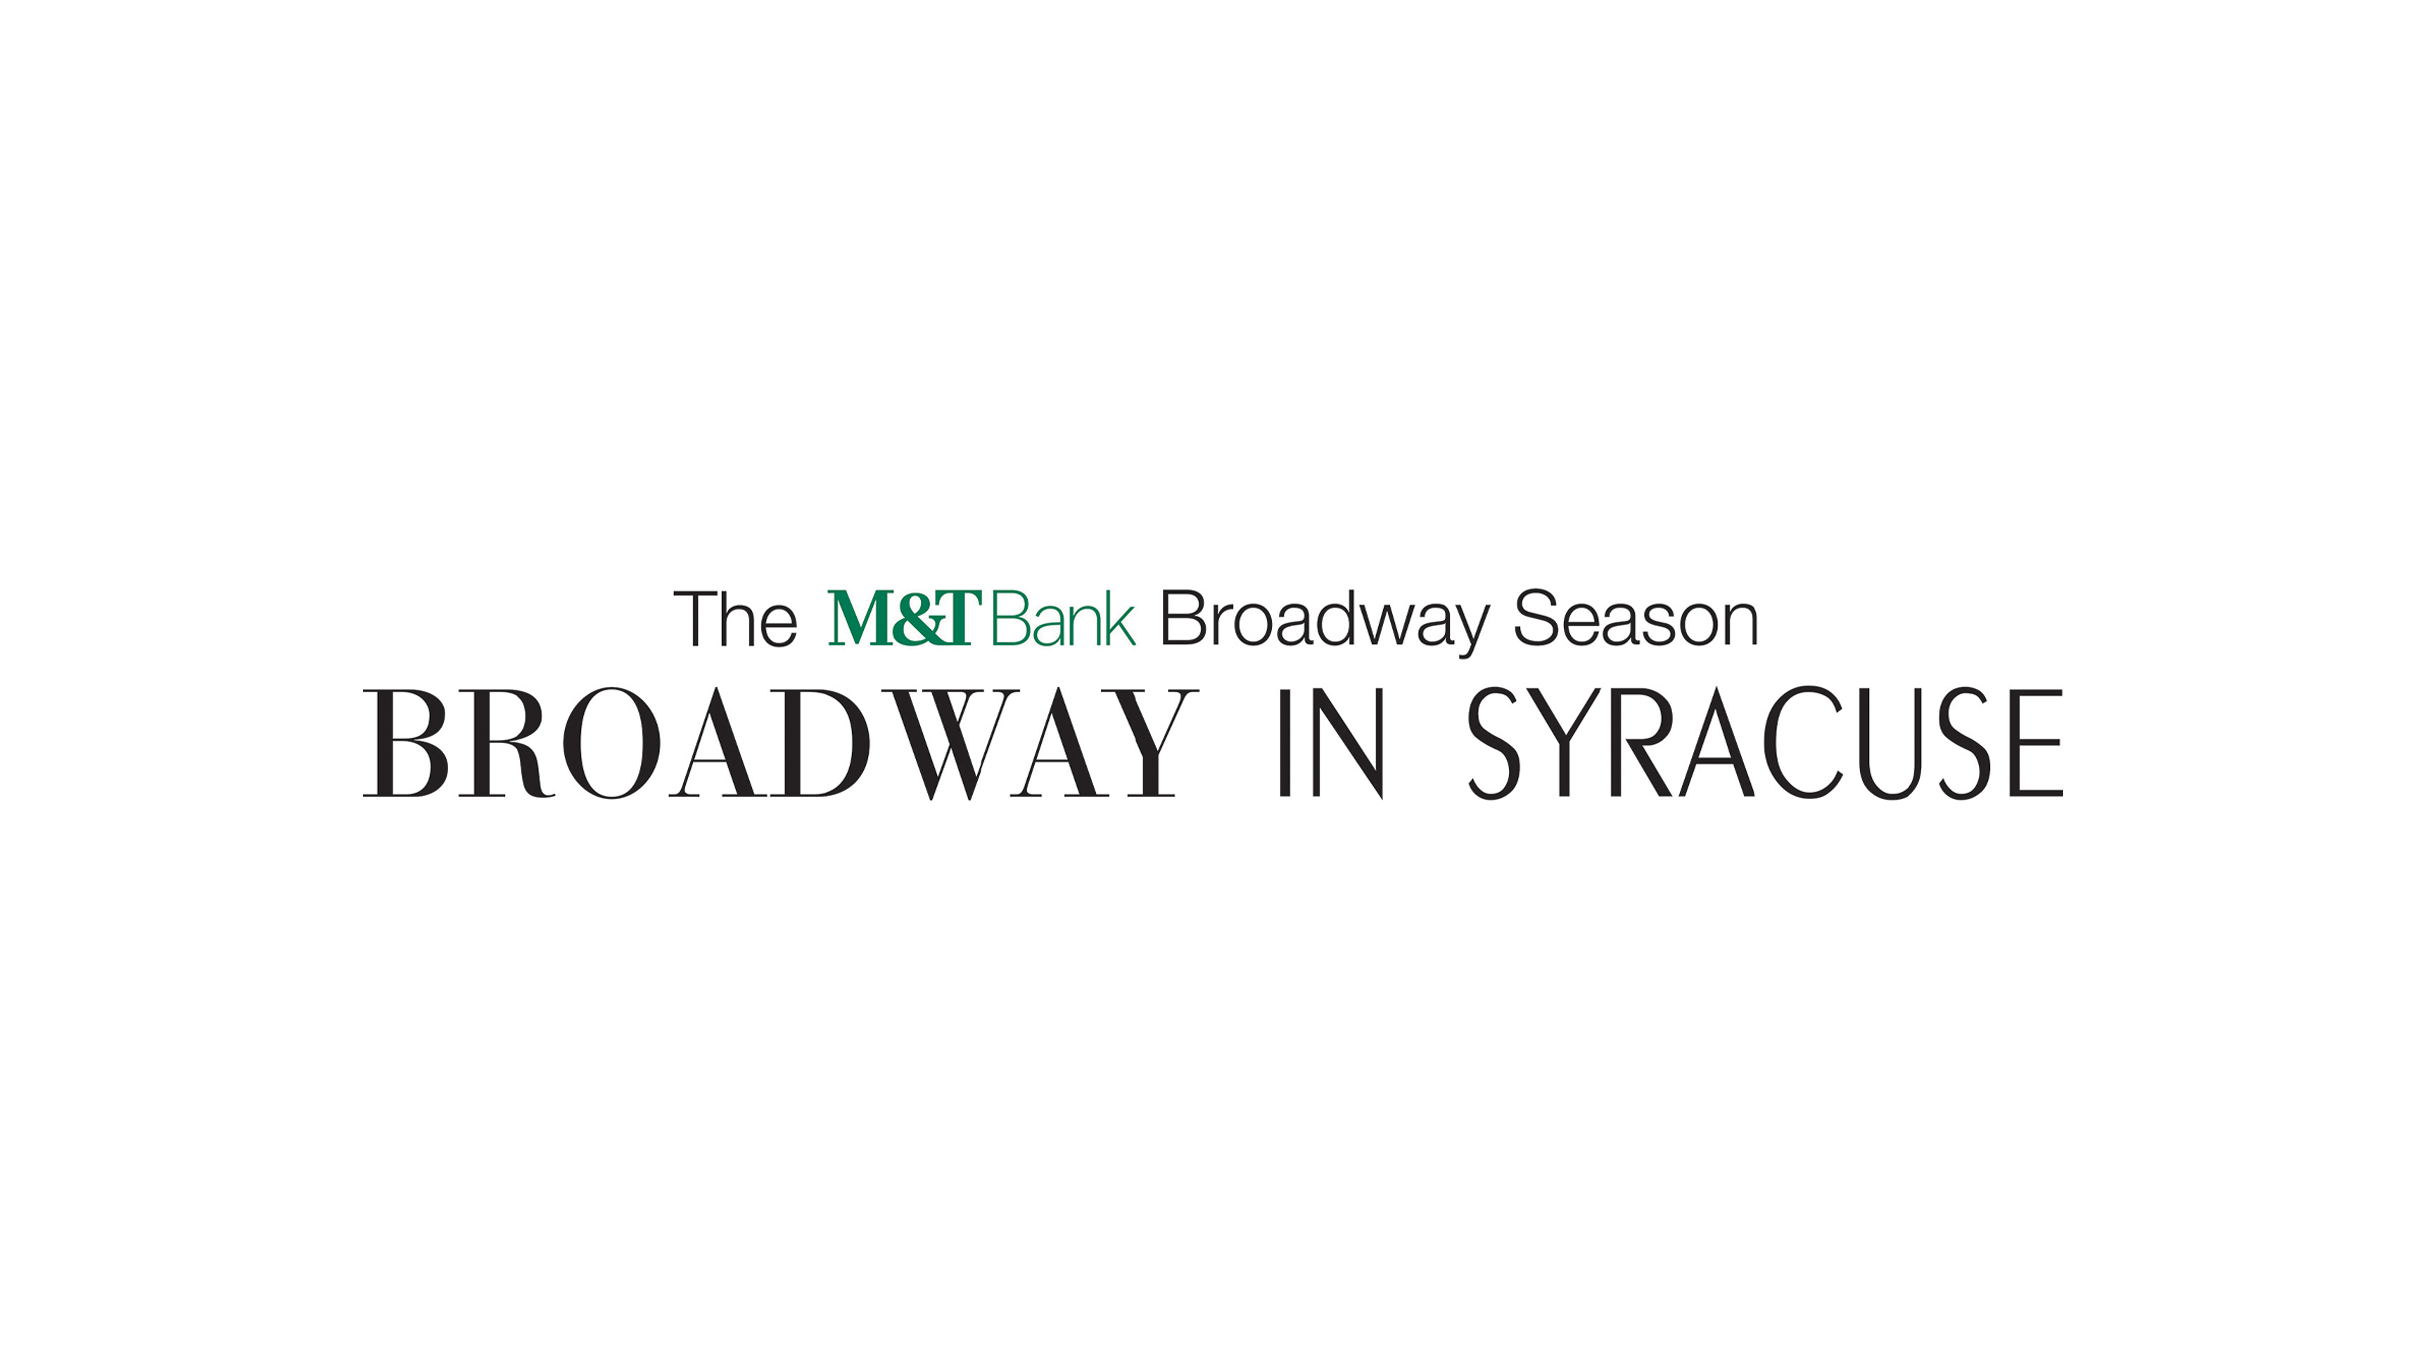 Broadway In Syracuse Season Tickets: Series A